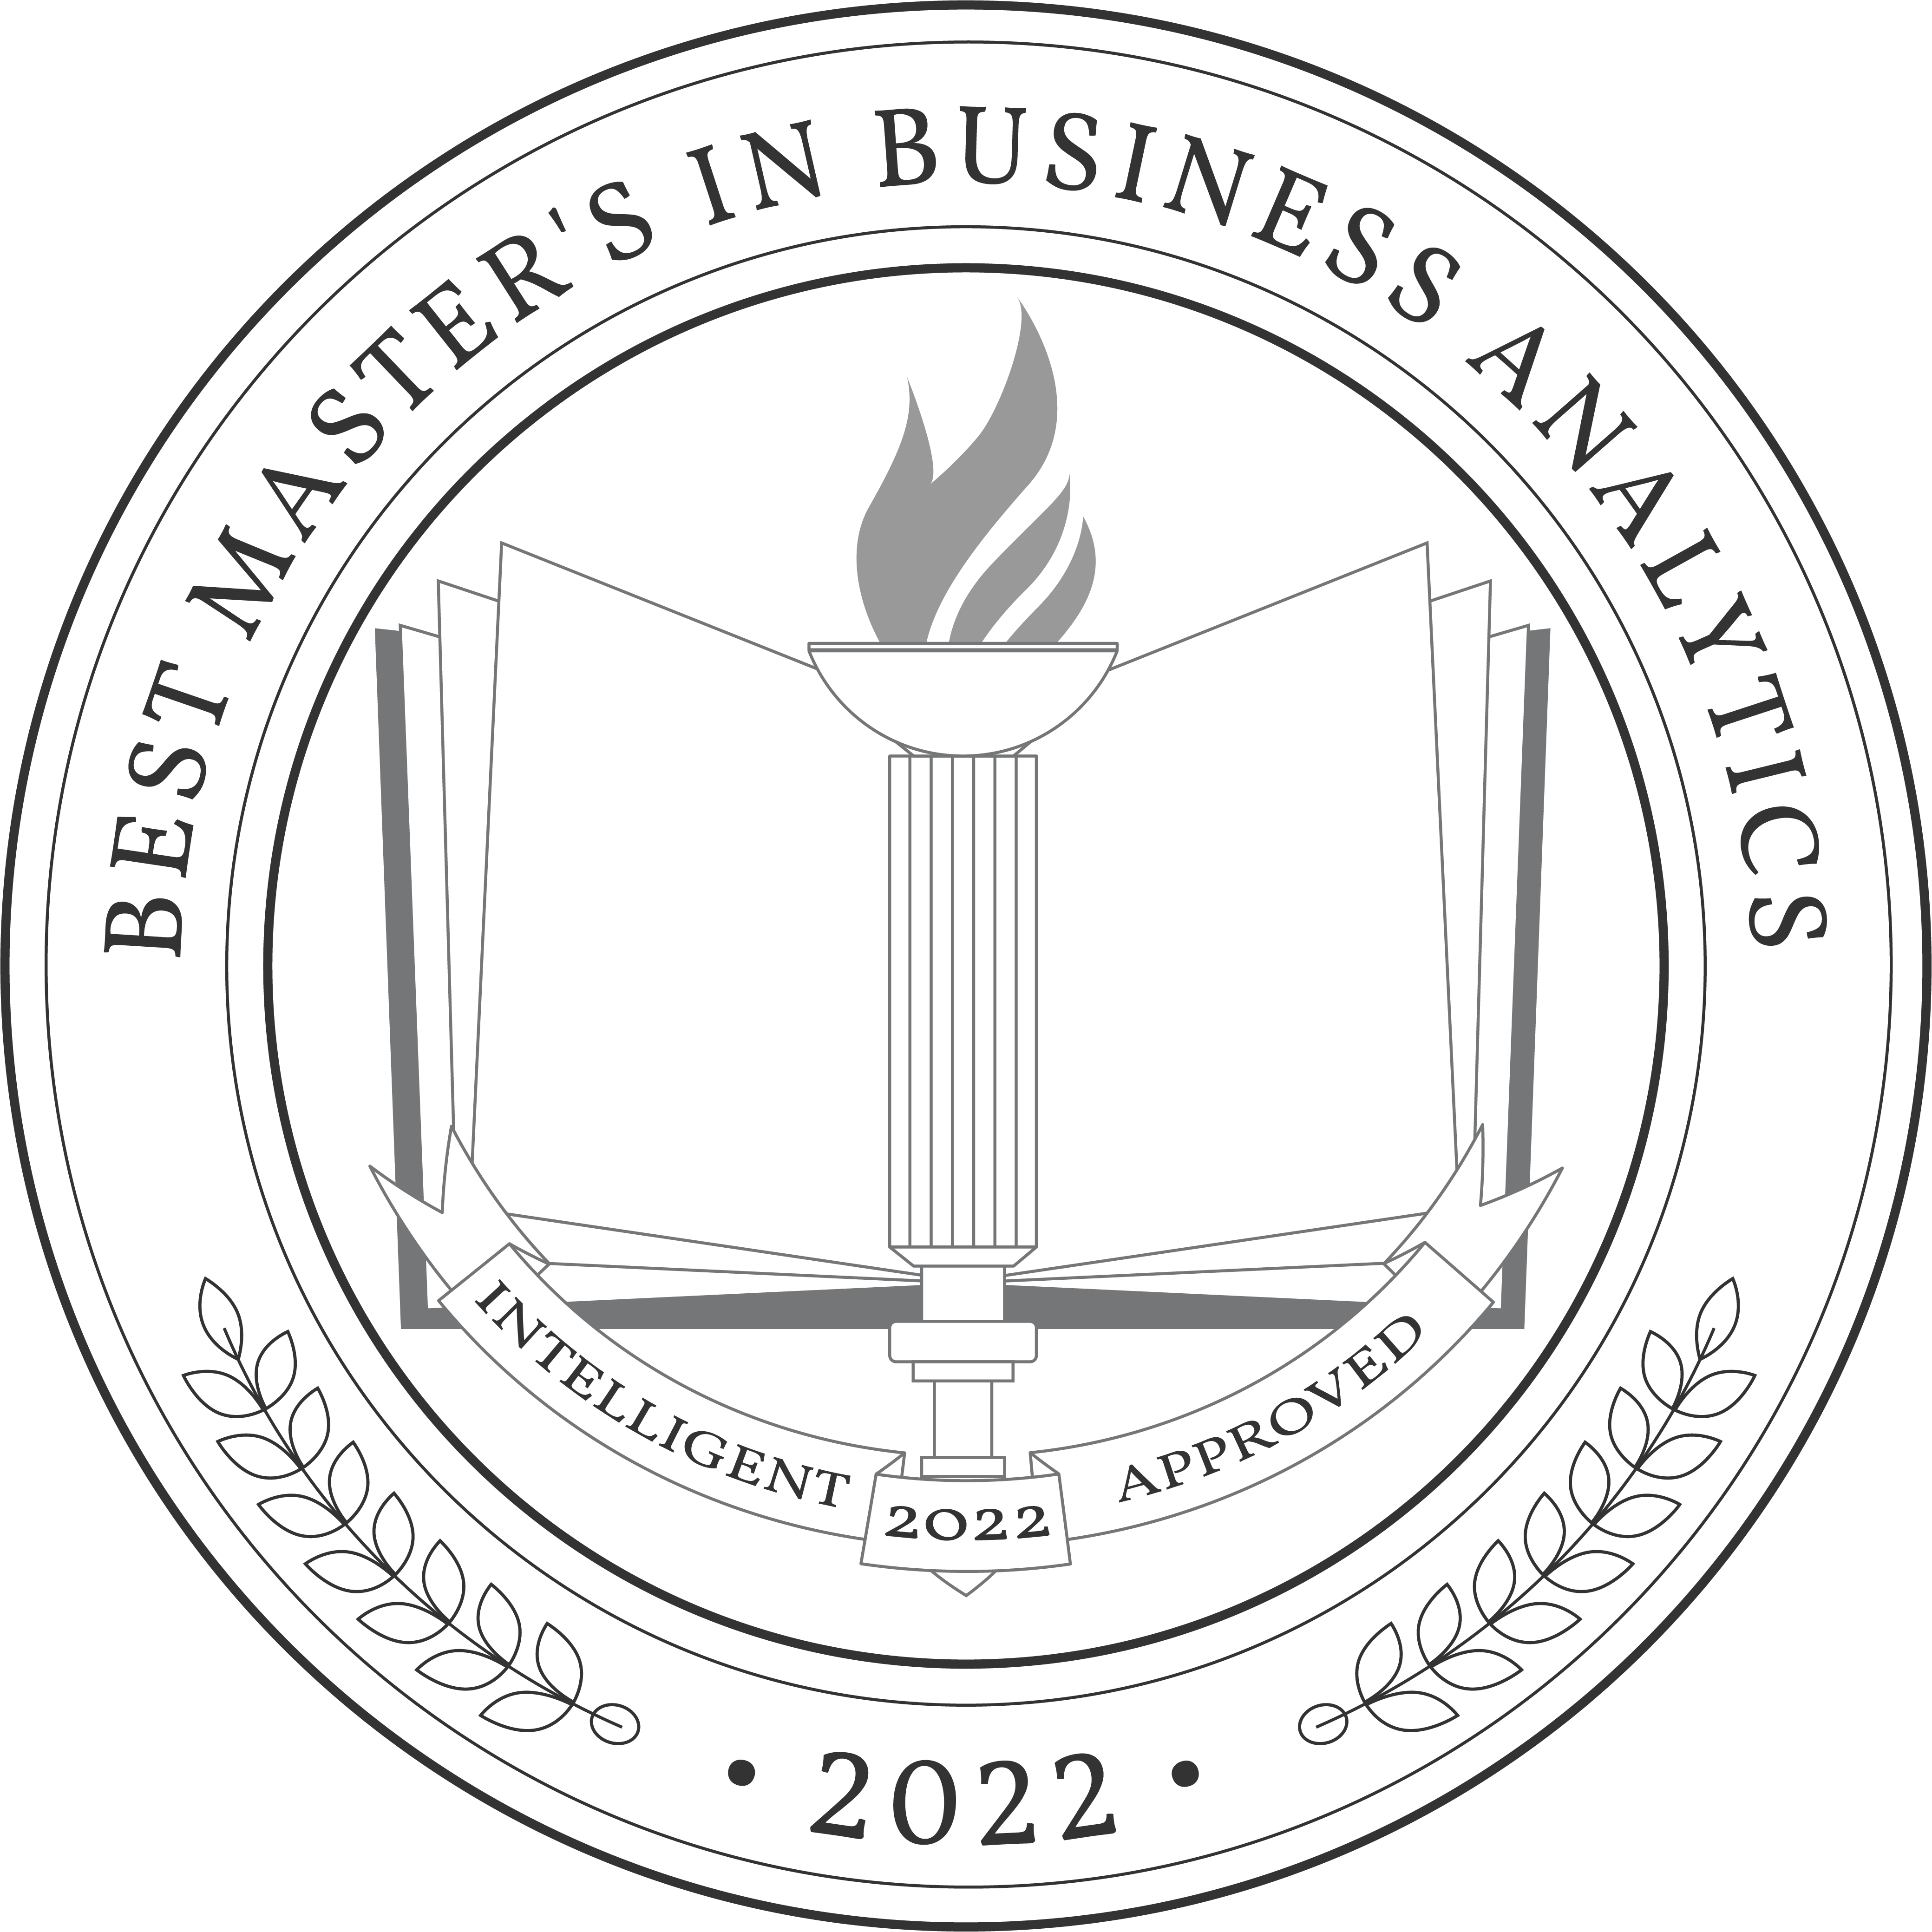 Best Master's in Business Analytics Degree Programs